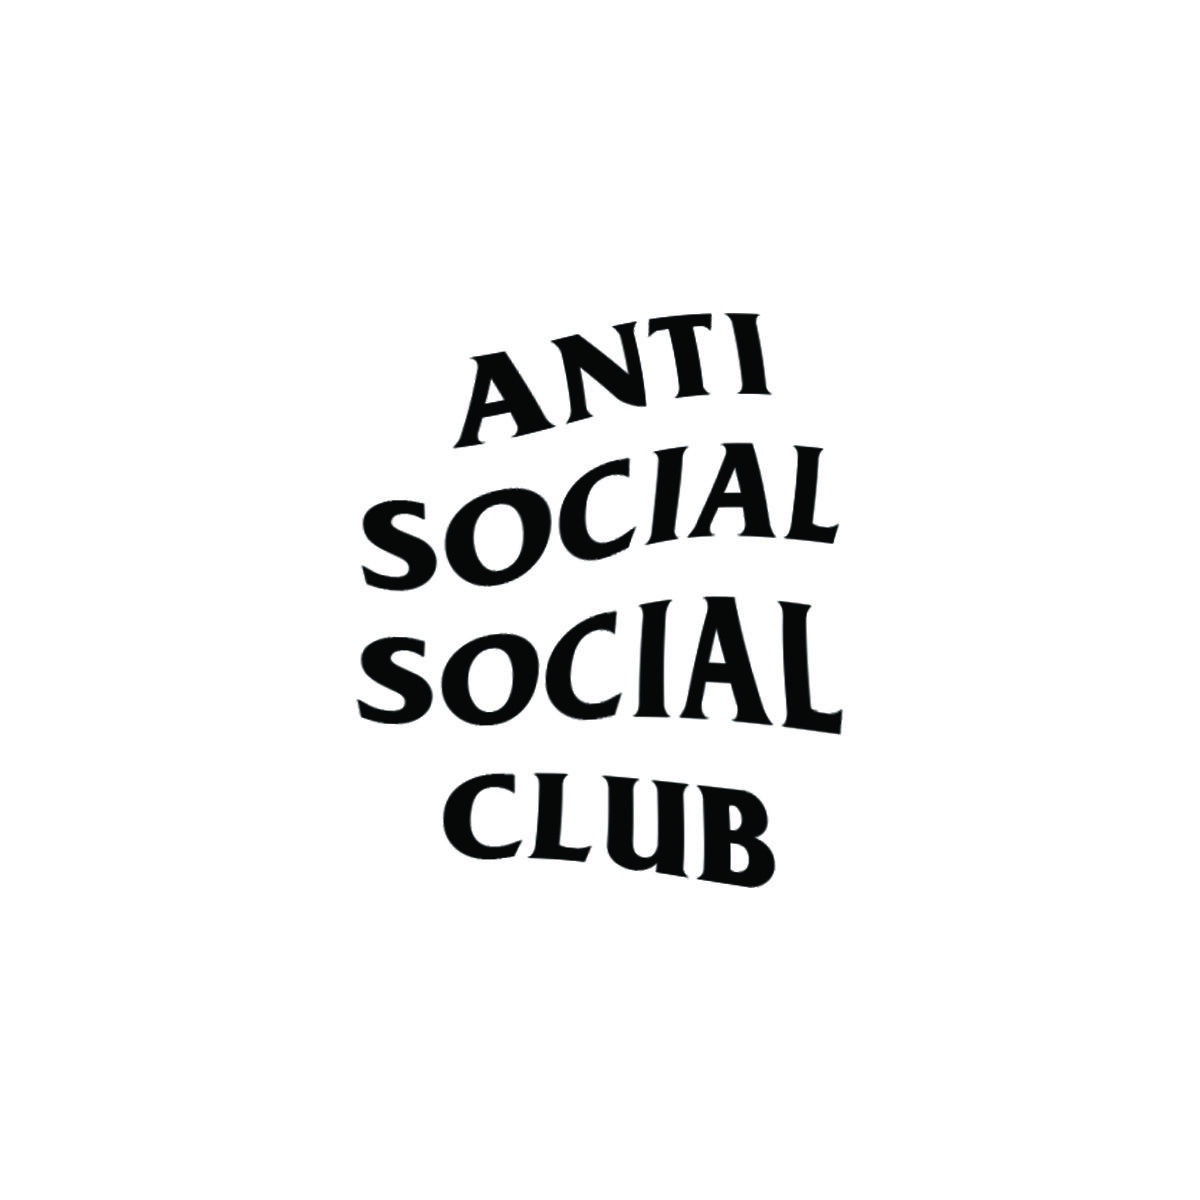 Anti social social club wallpaper